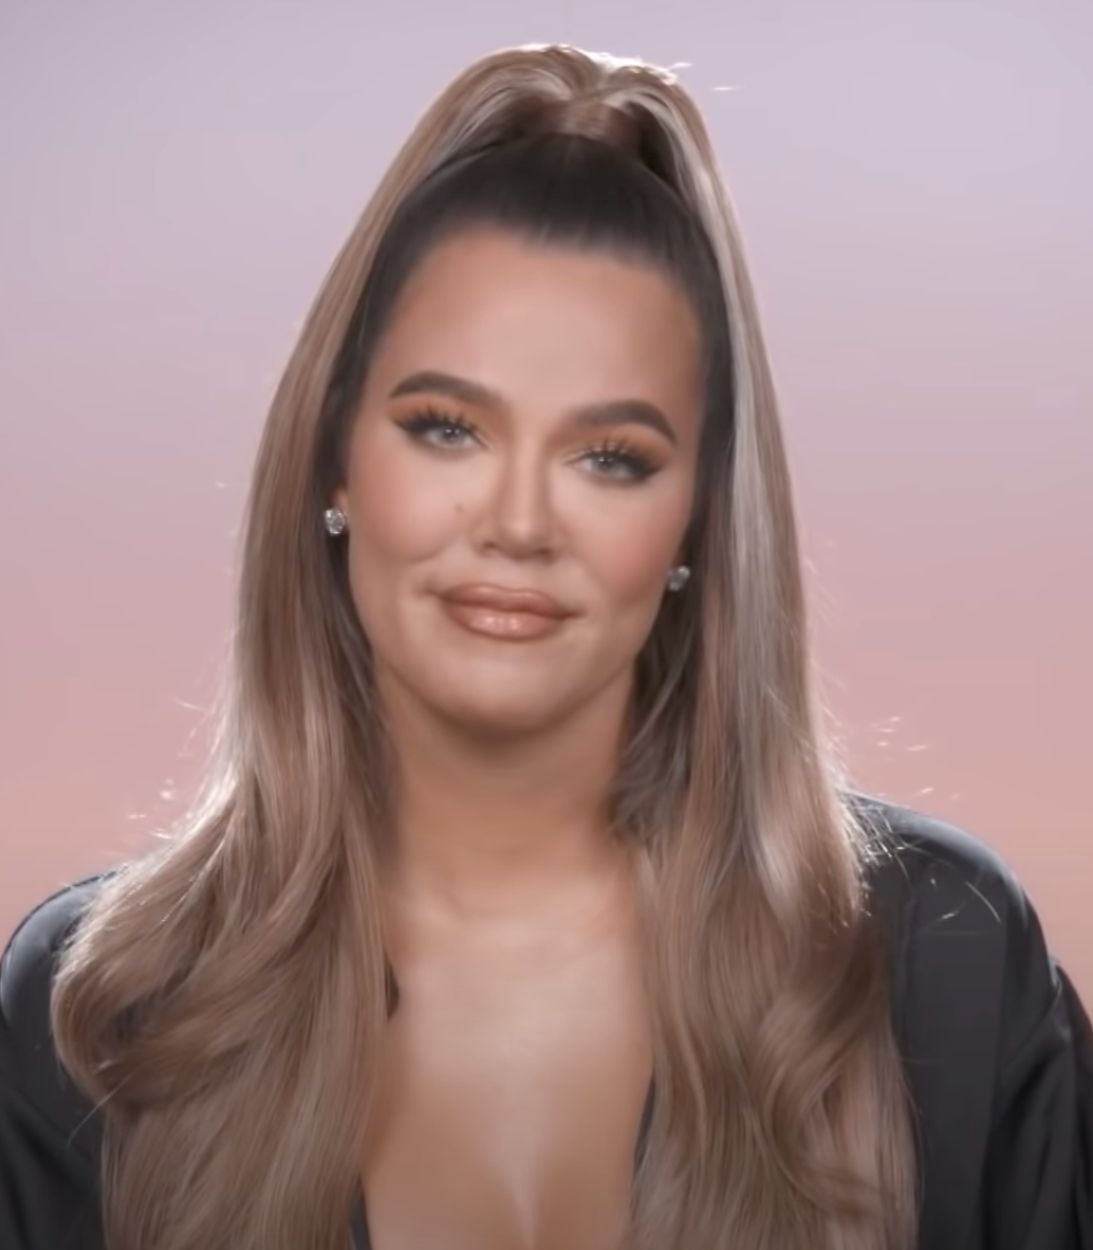 Khloe Kardashian on Keeping Up With The Kardashians season 20 confessional vertical